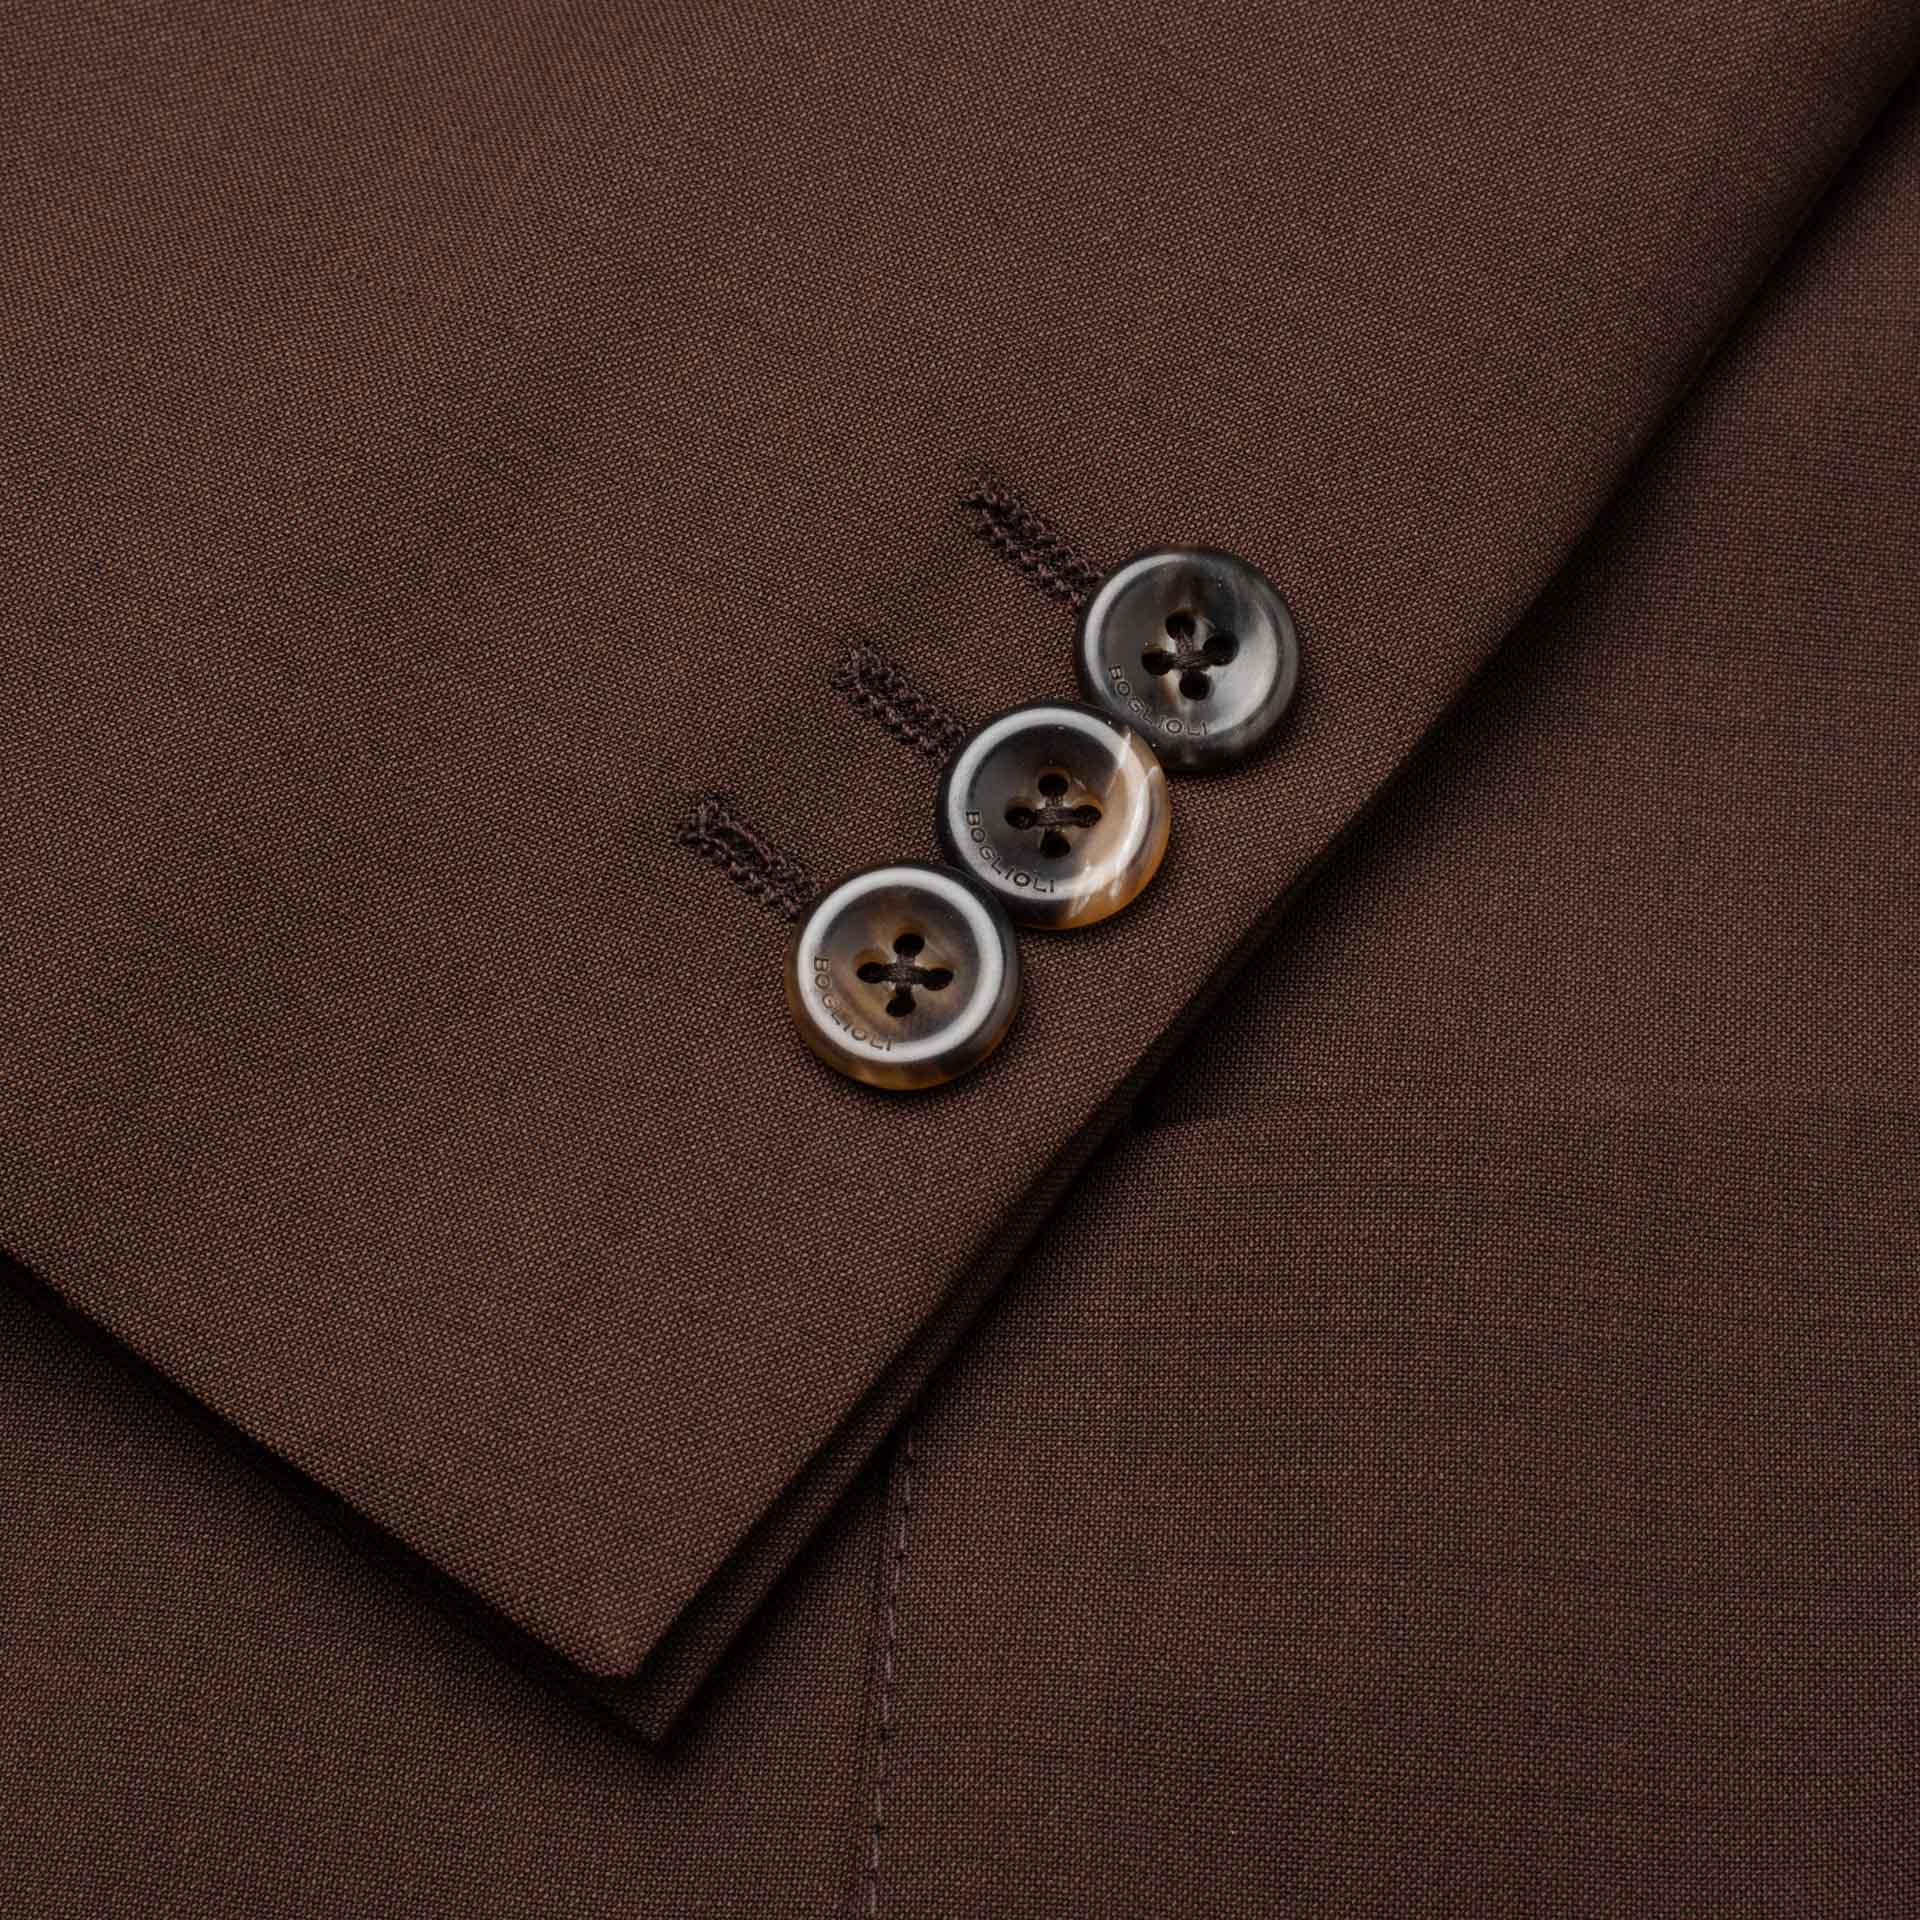 BOGLIOLI Milano "Dover" Brown Wool Soft Jacket Sport Coat EU 48 NEW US 38